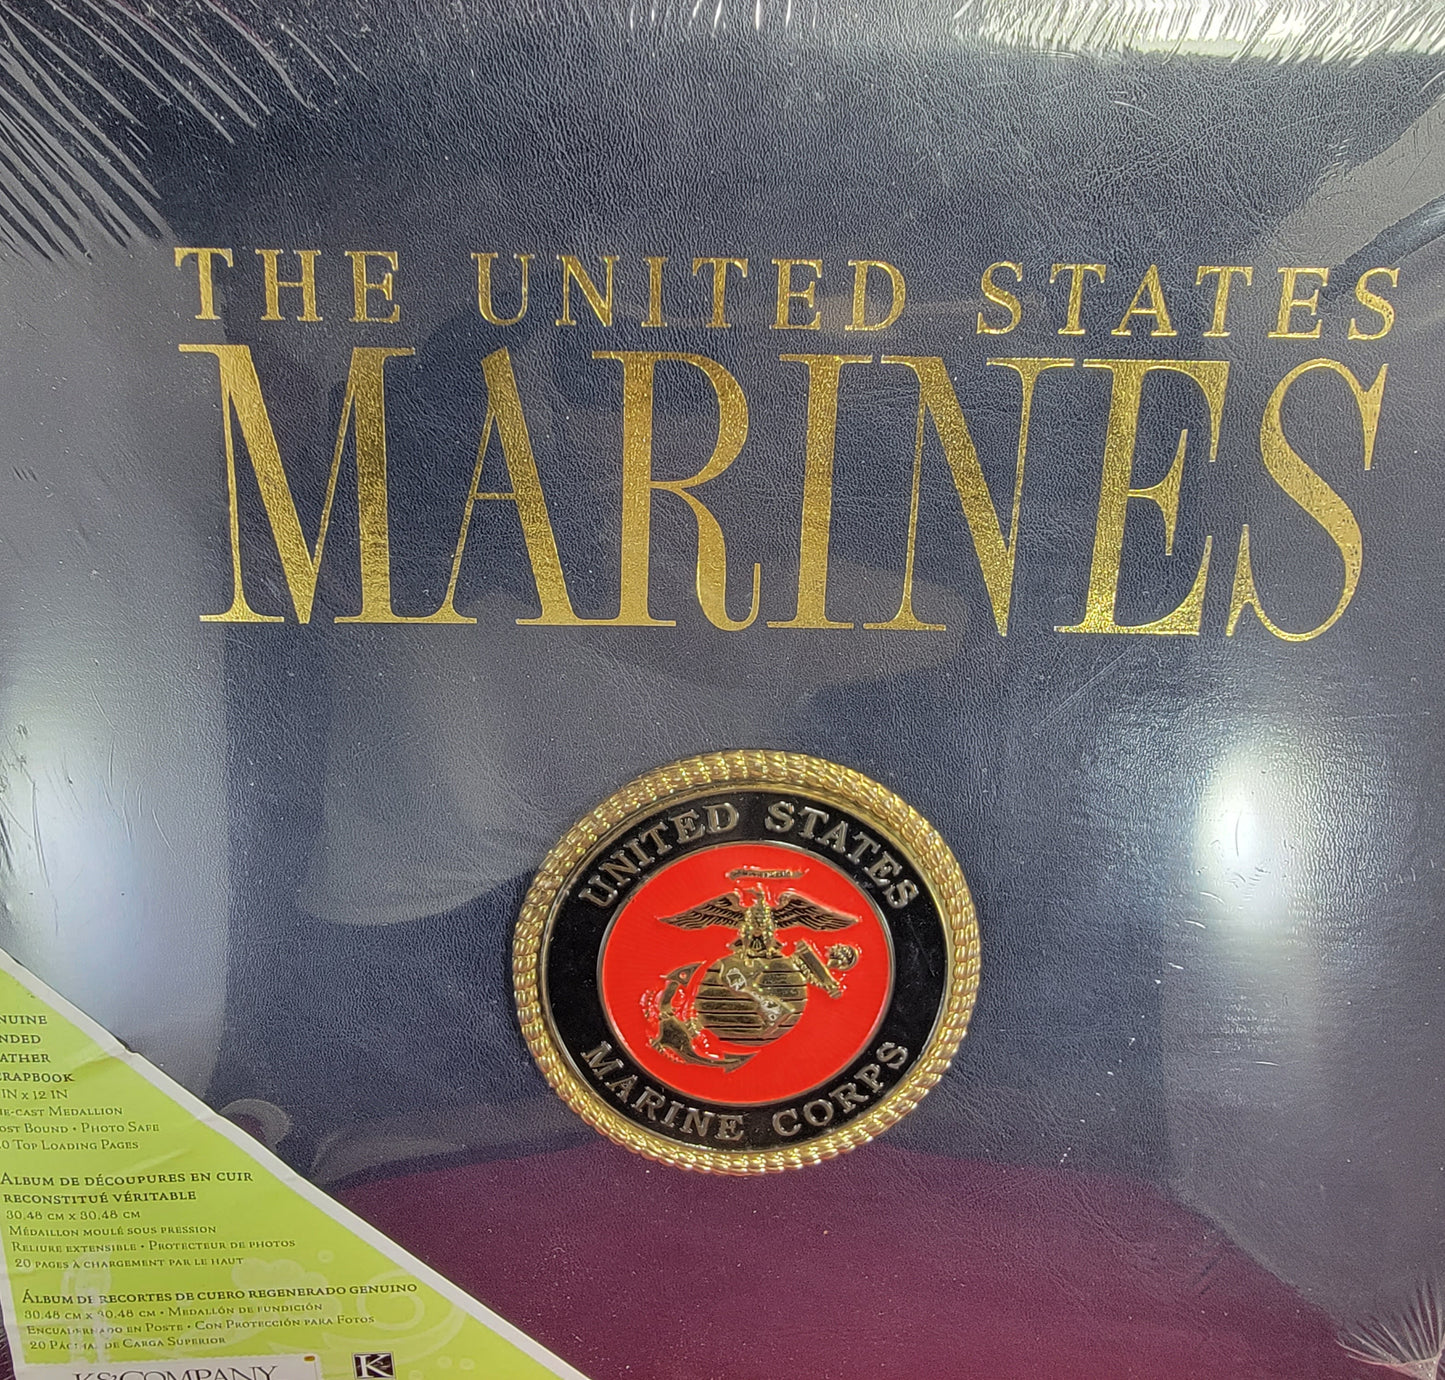 New United States Marine photo album